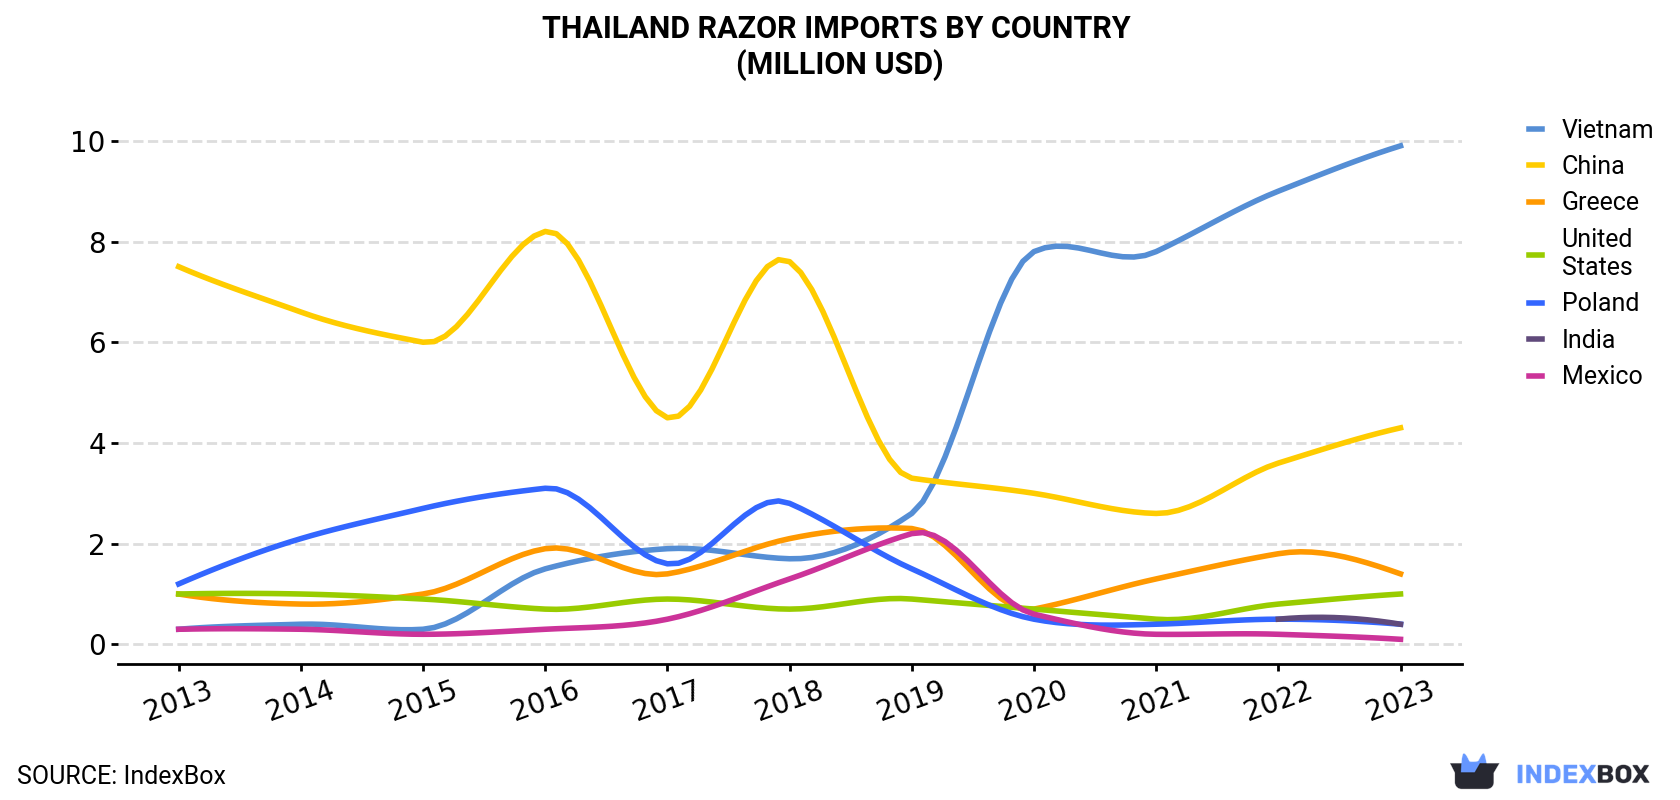 Thailand Razor Imports By Country (Million USD)